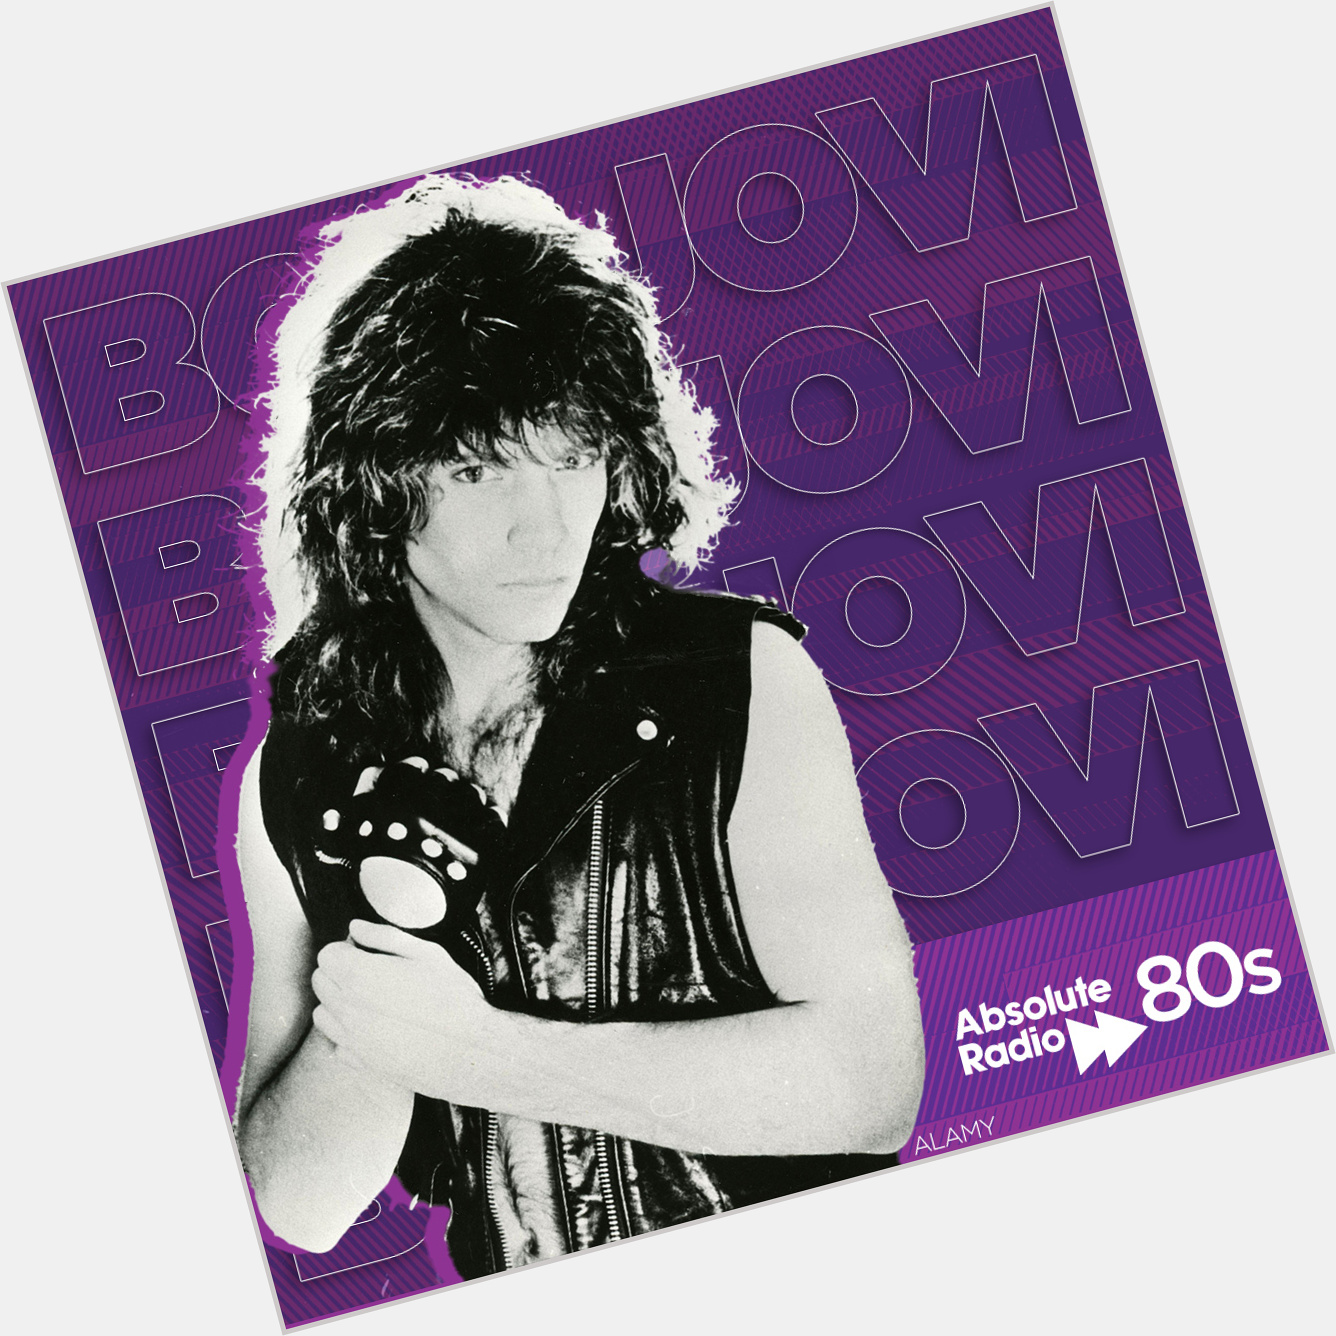 Today we\re wishing Jon Bon Jovi a very happy 60th birthday!  